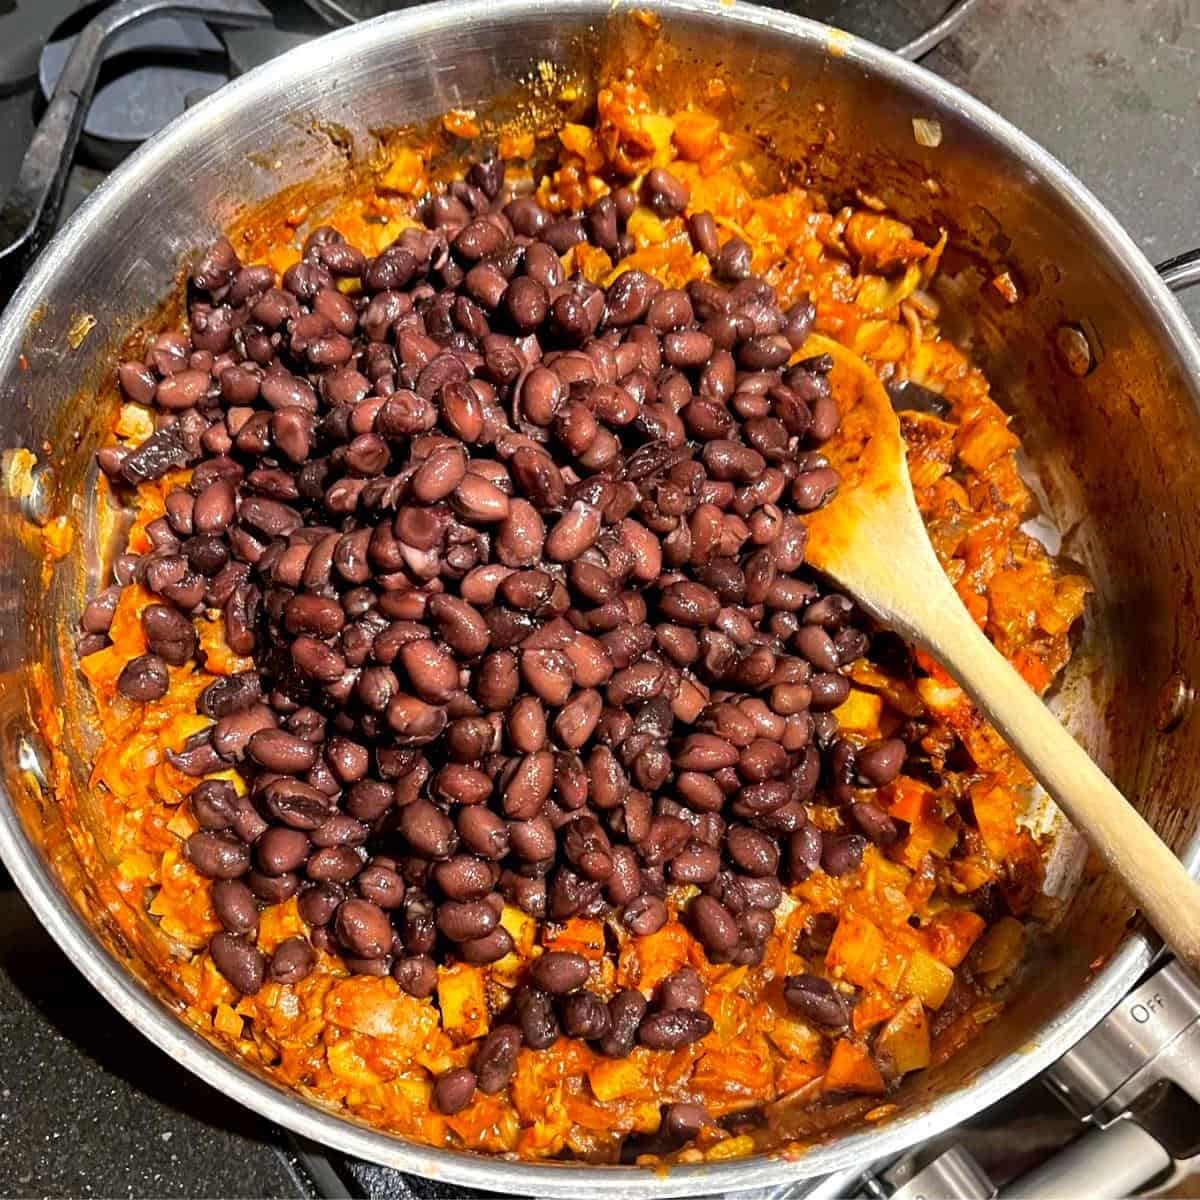 Black beans added to veggies in skillet.